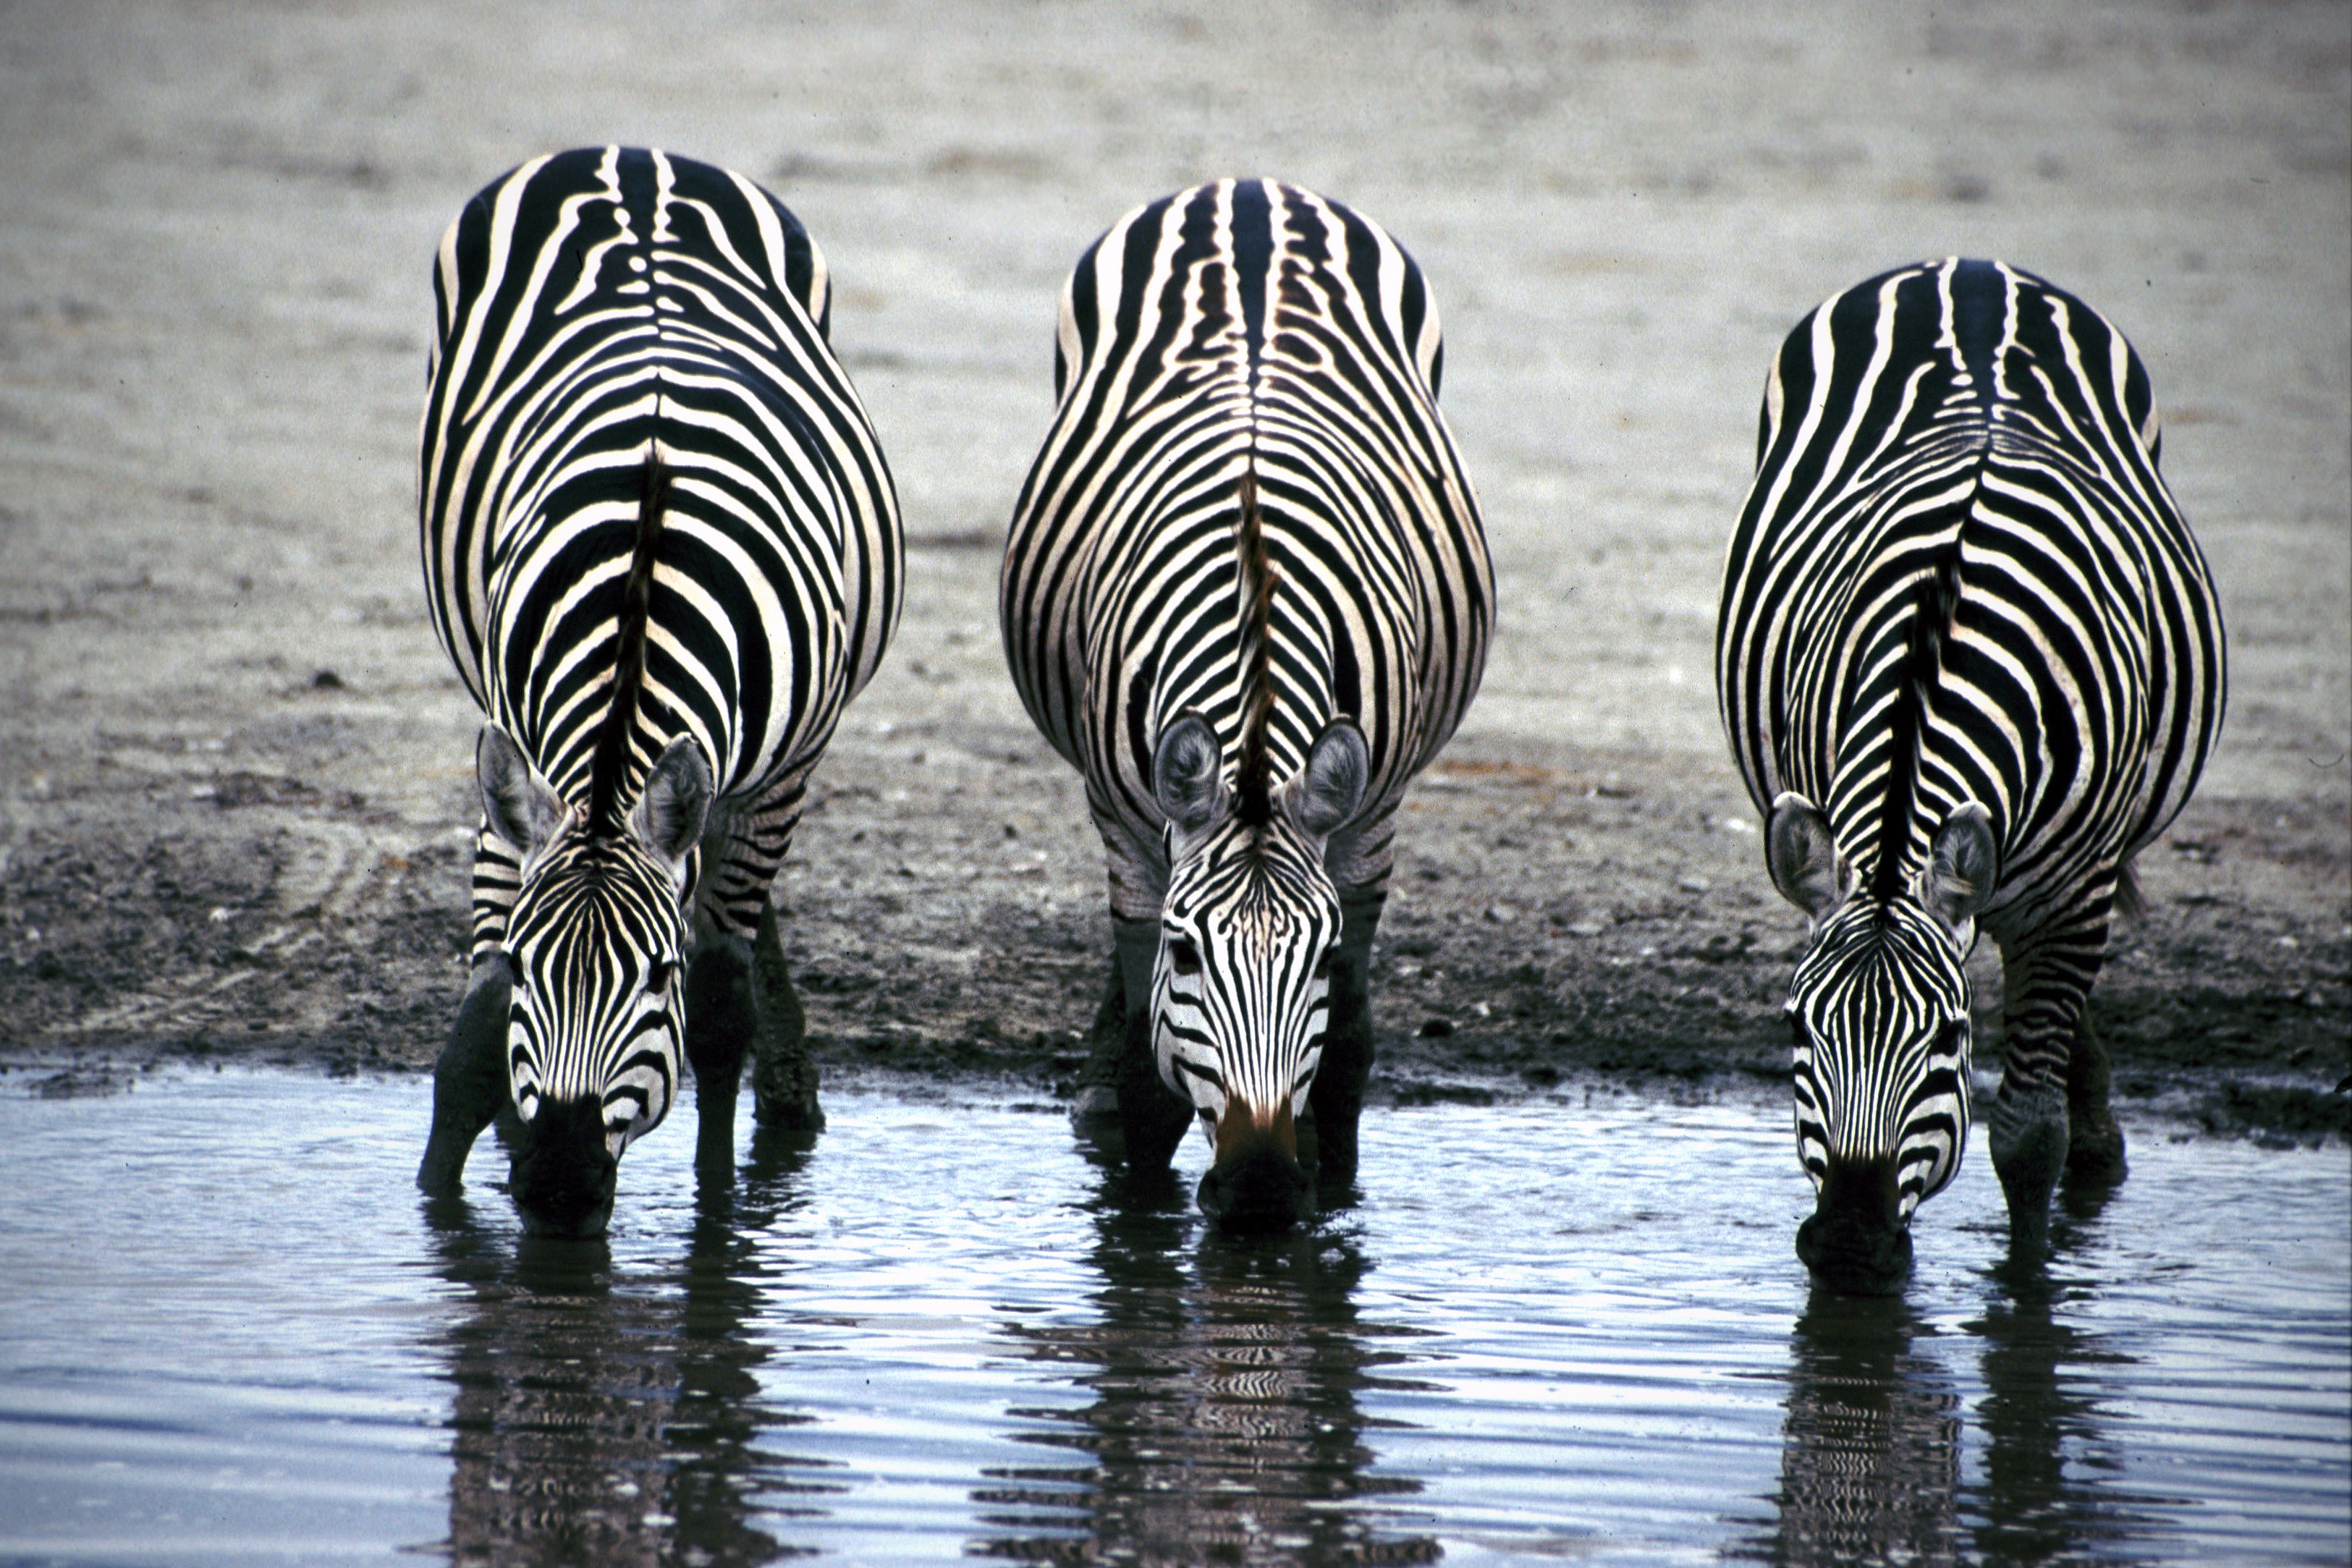 How the zebra got its stripes | British Science Festival